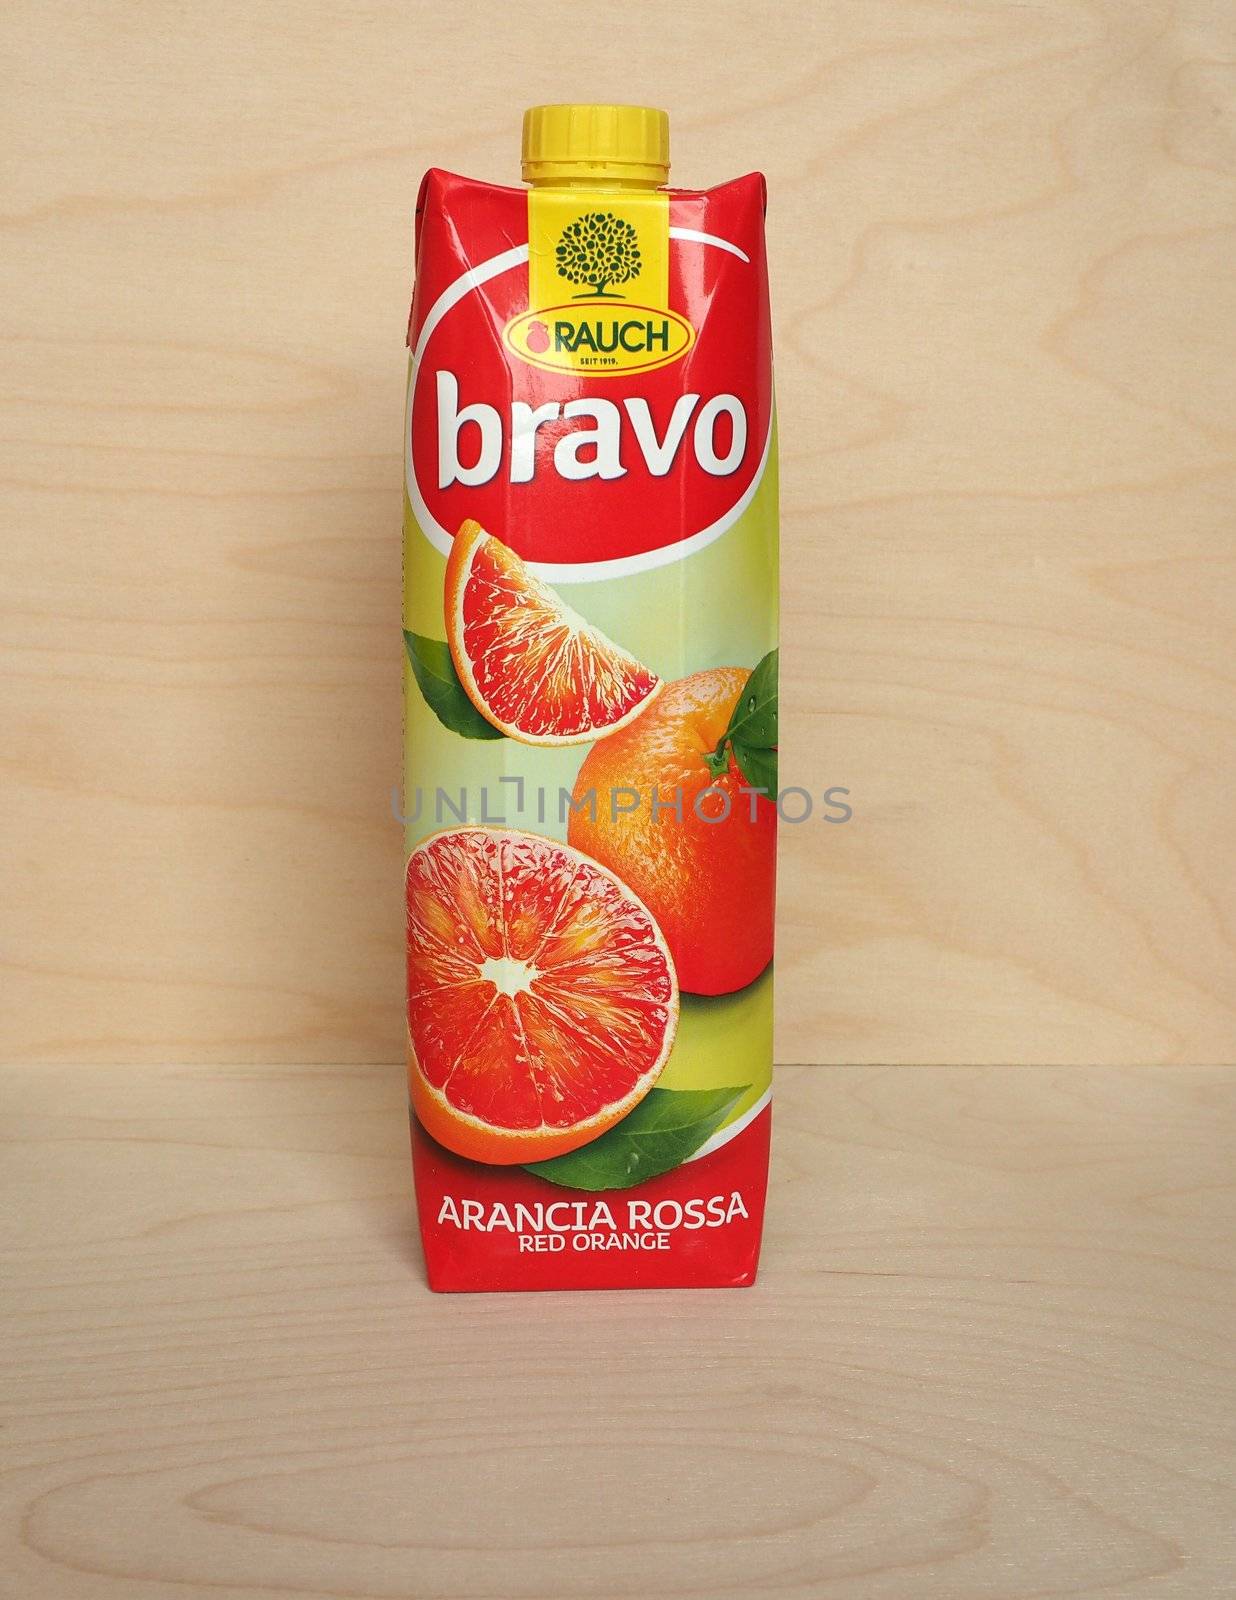 RANKWEIL - APR 2020: Rauch red orange juice packet by claudiodivizia